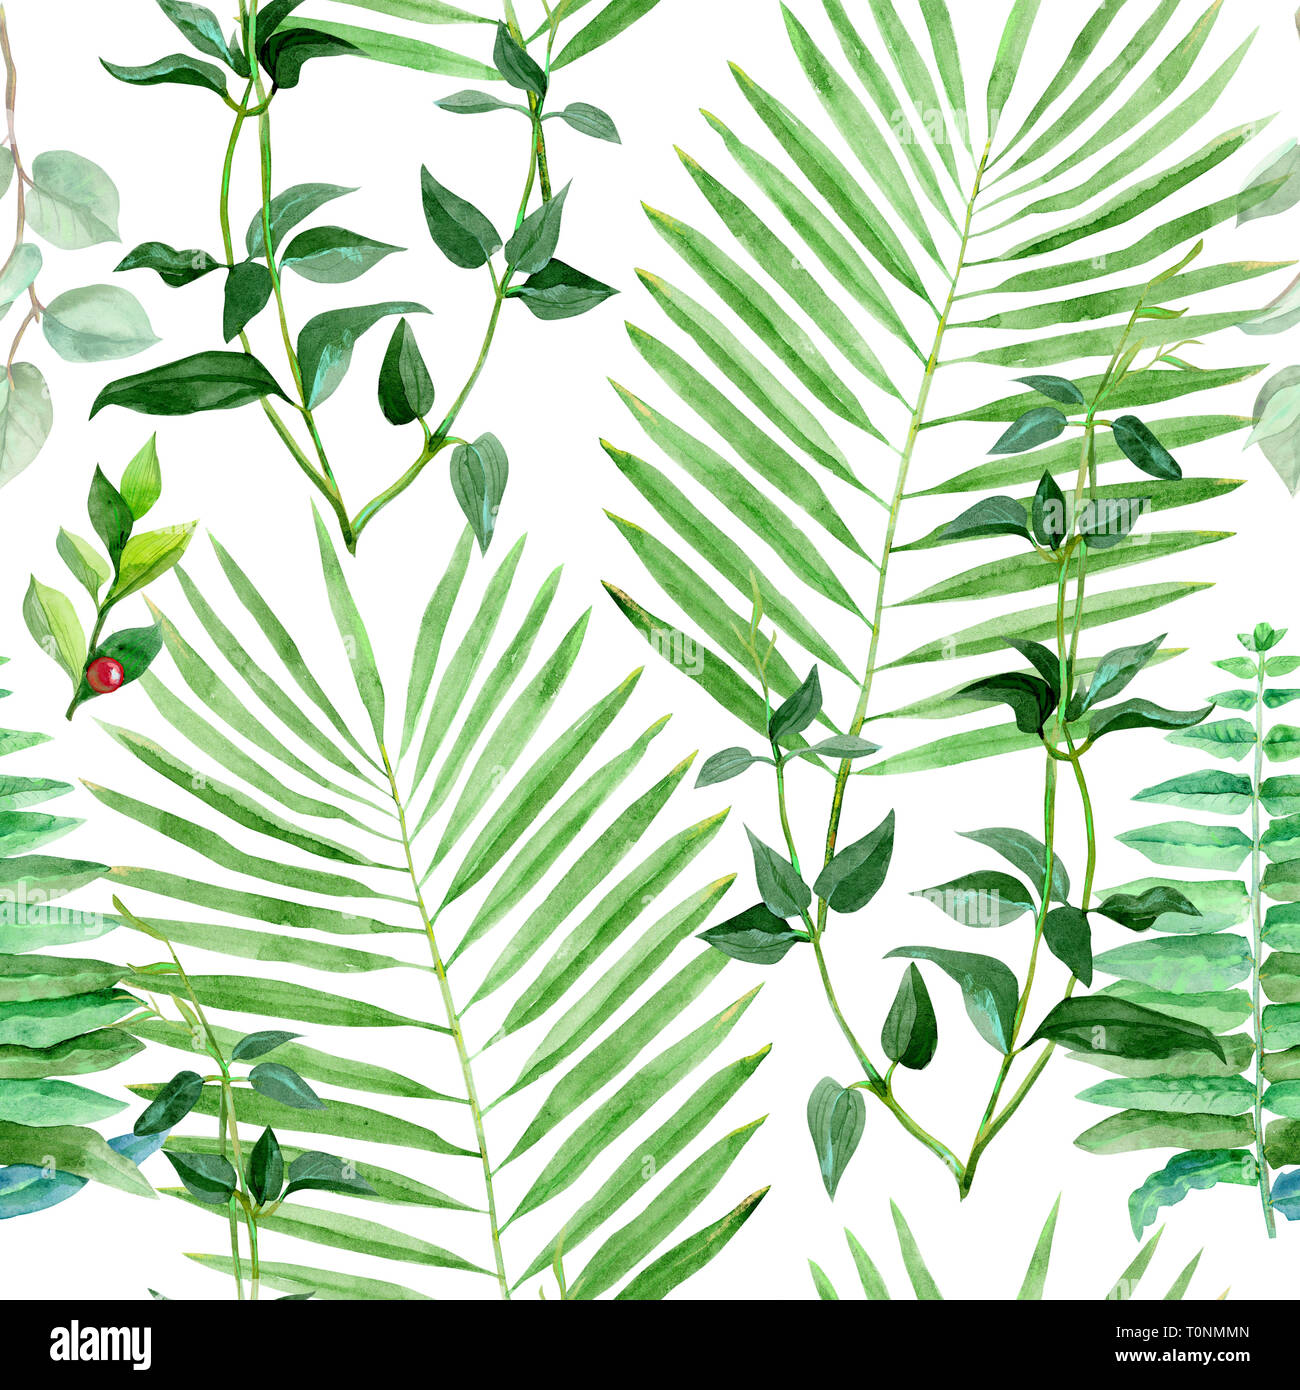 green floral print